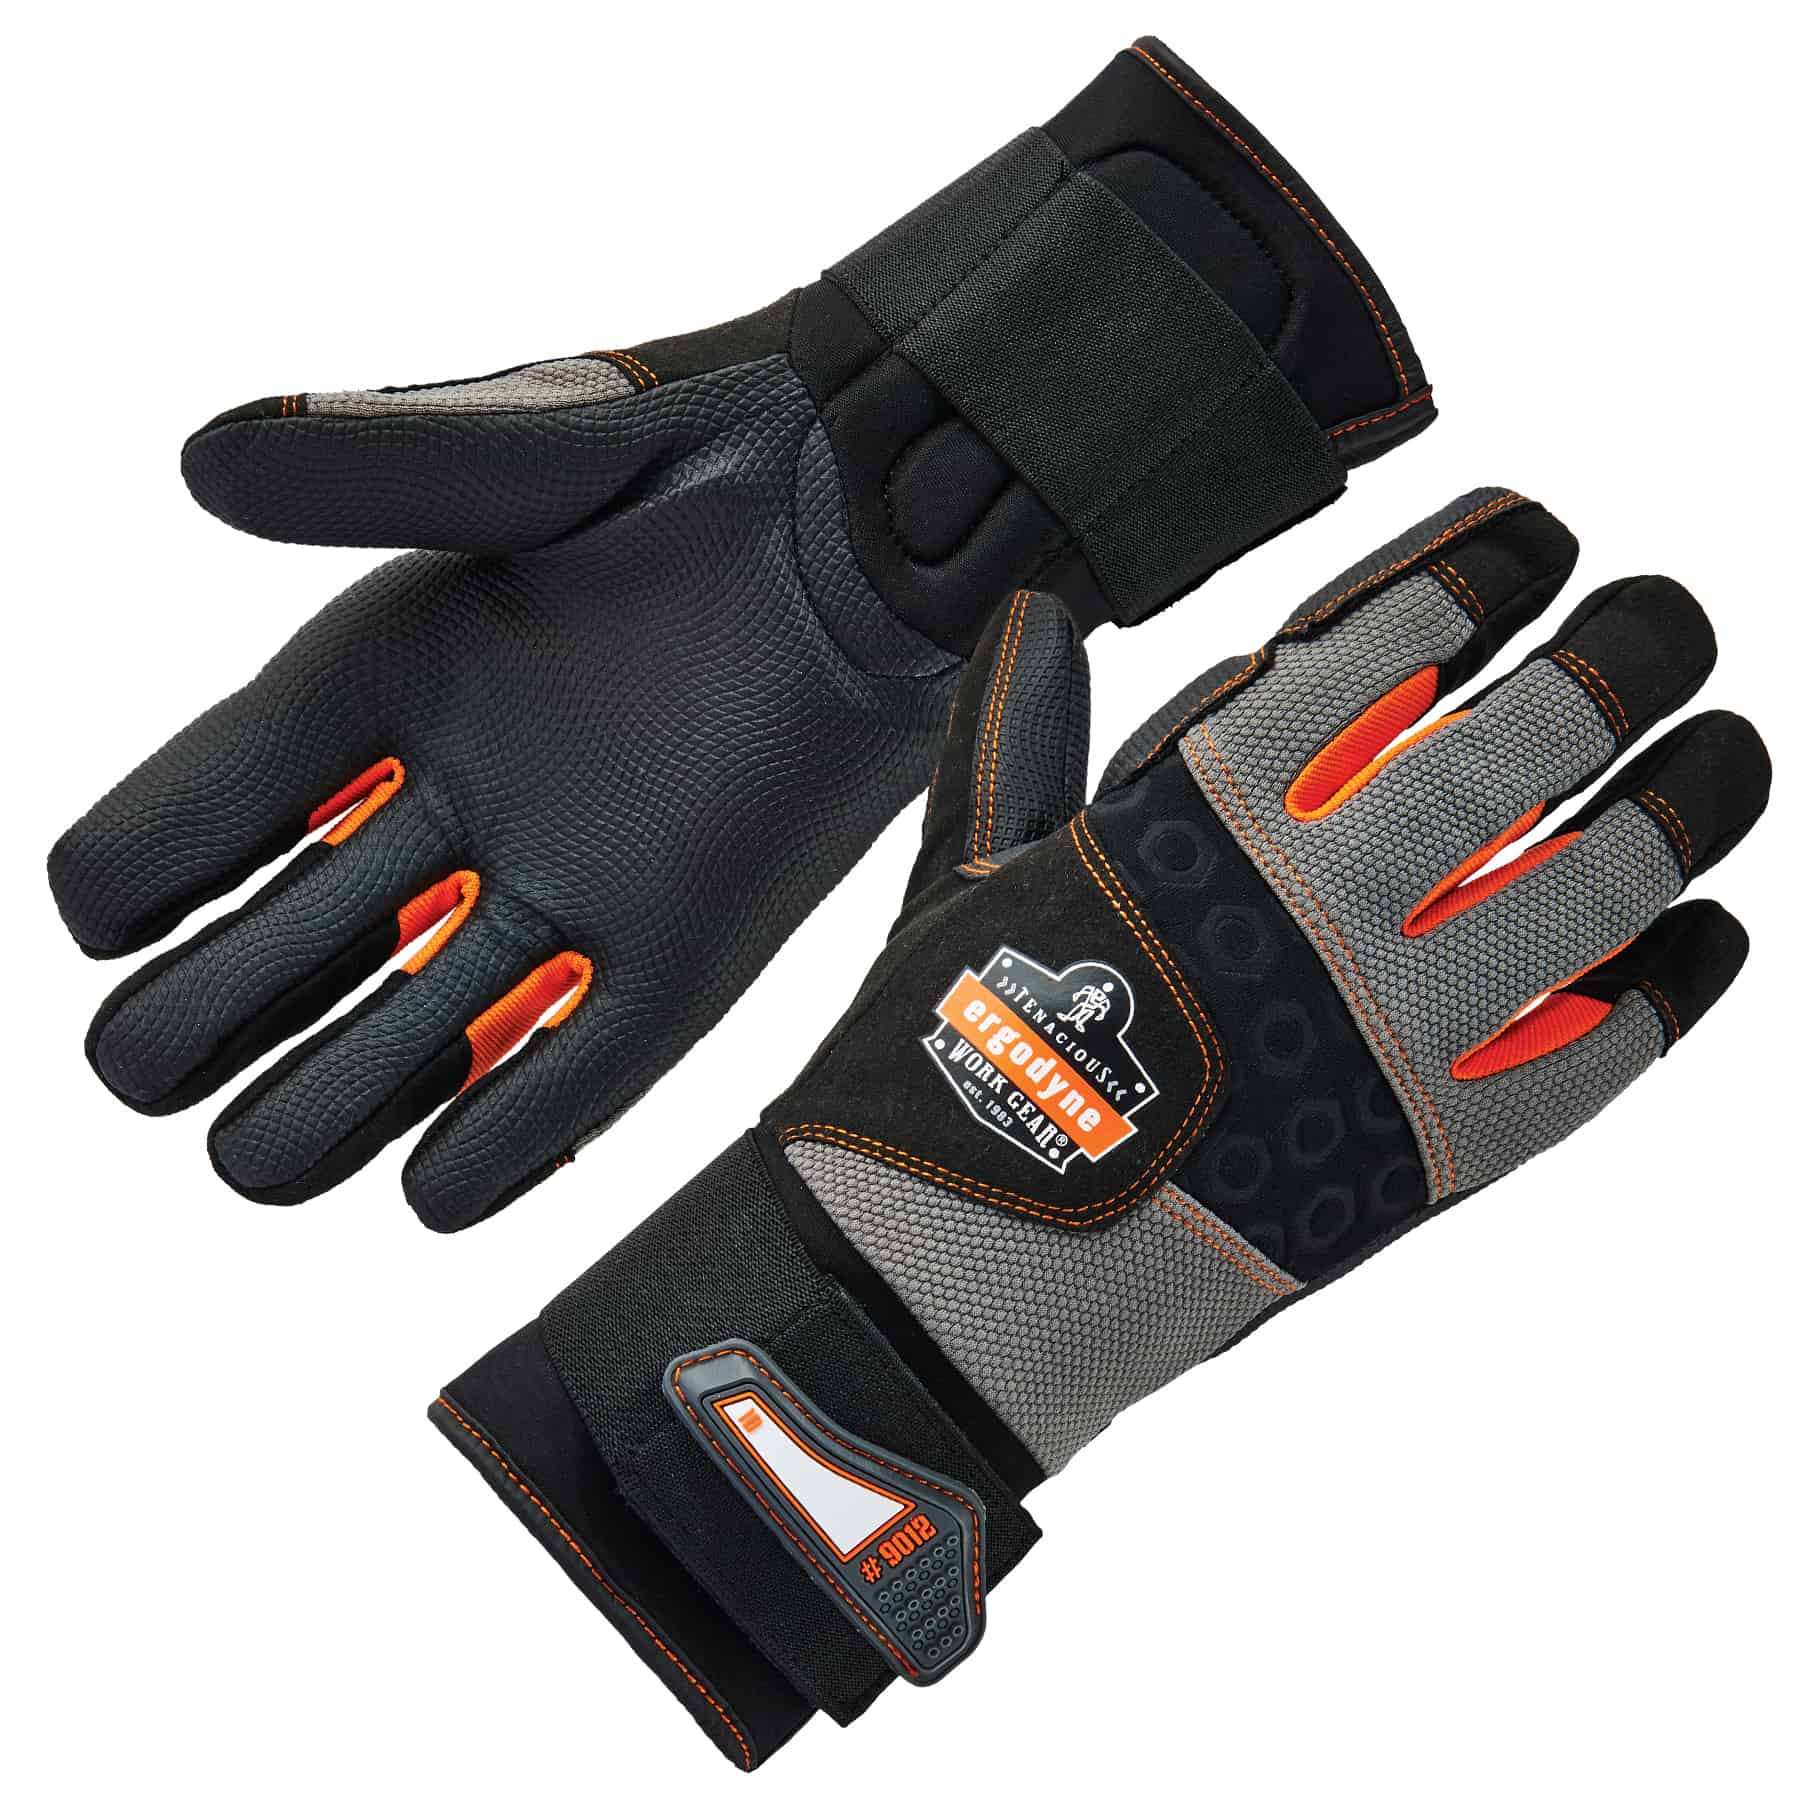 New DECADE Work Glove 49449 Riveter’s SX-M Left Hand Glove Vibration Reducing 